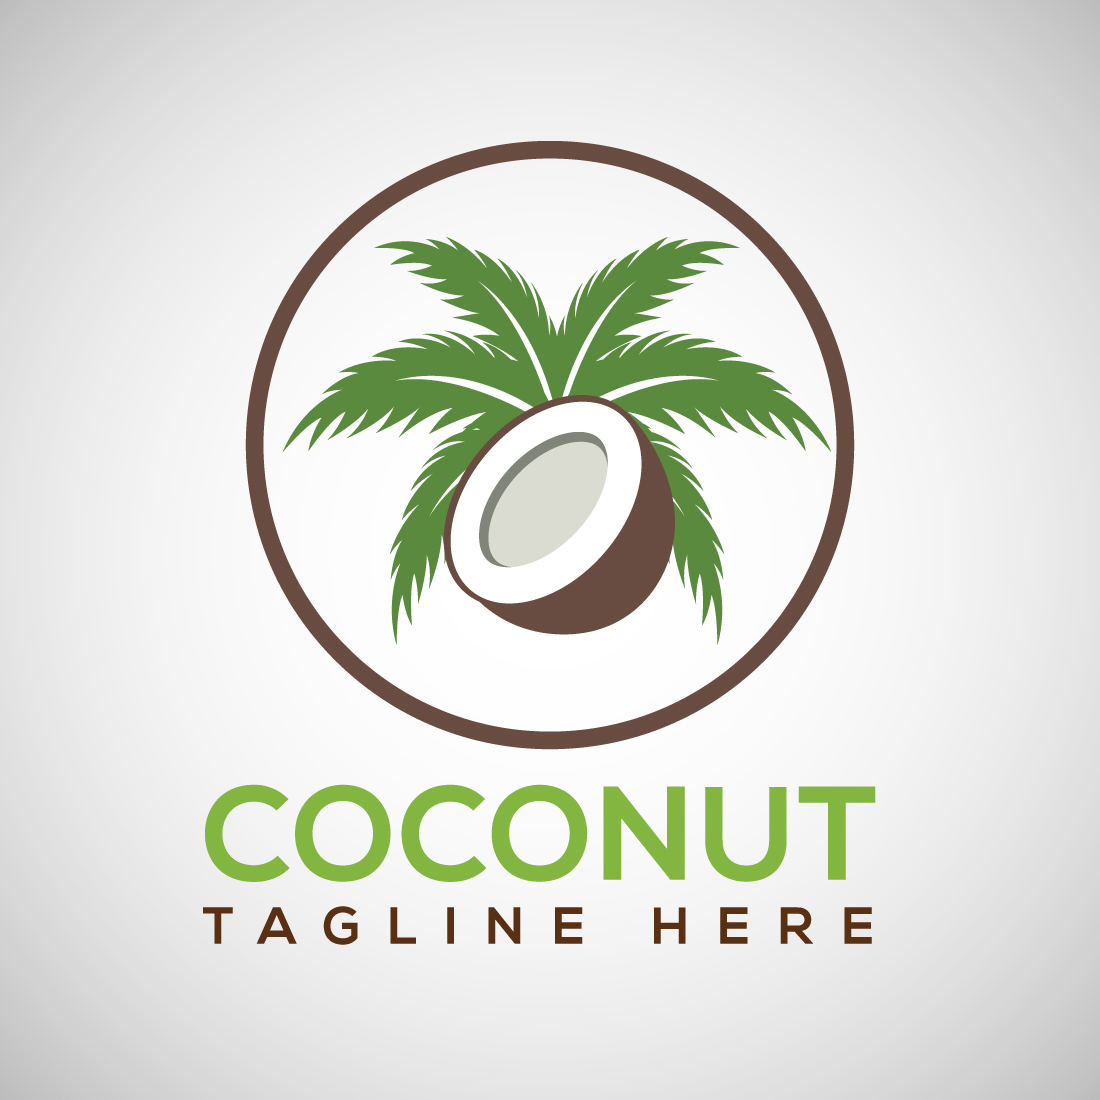 Beverage Coconut Logo Vector Design cover image.